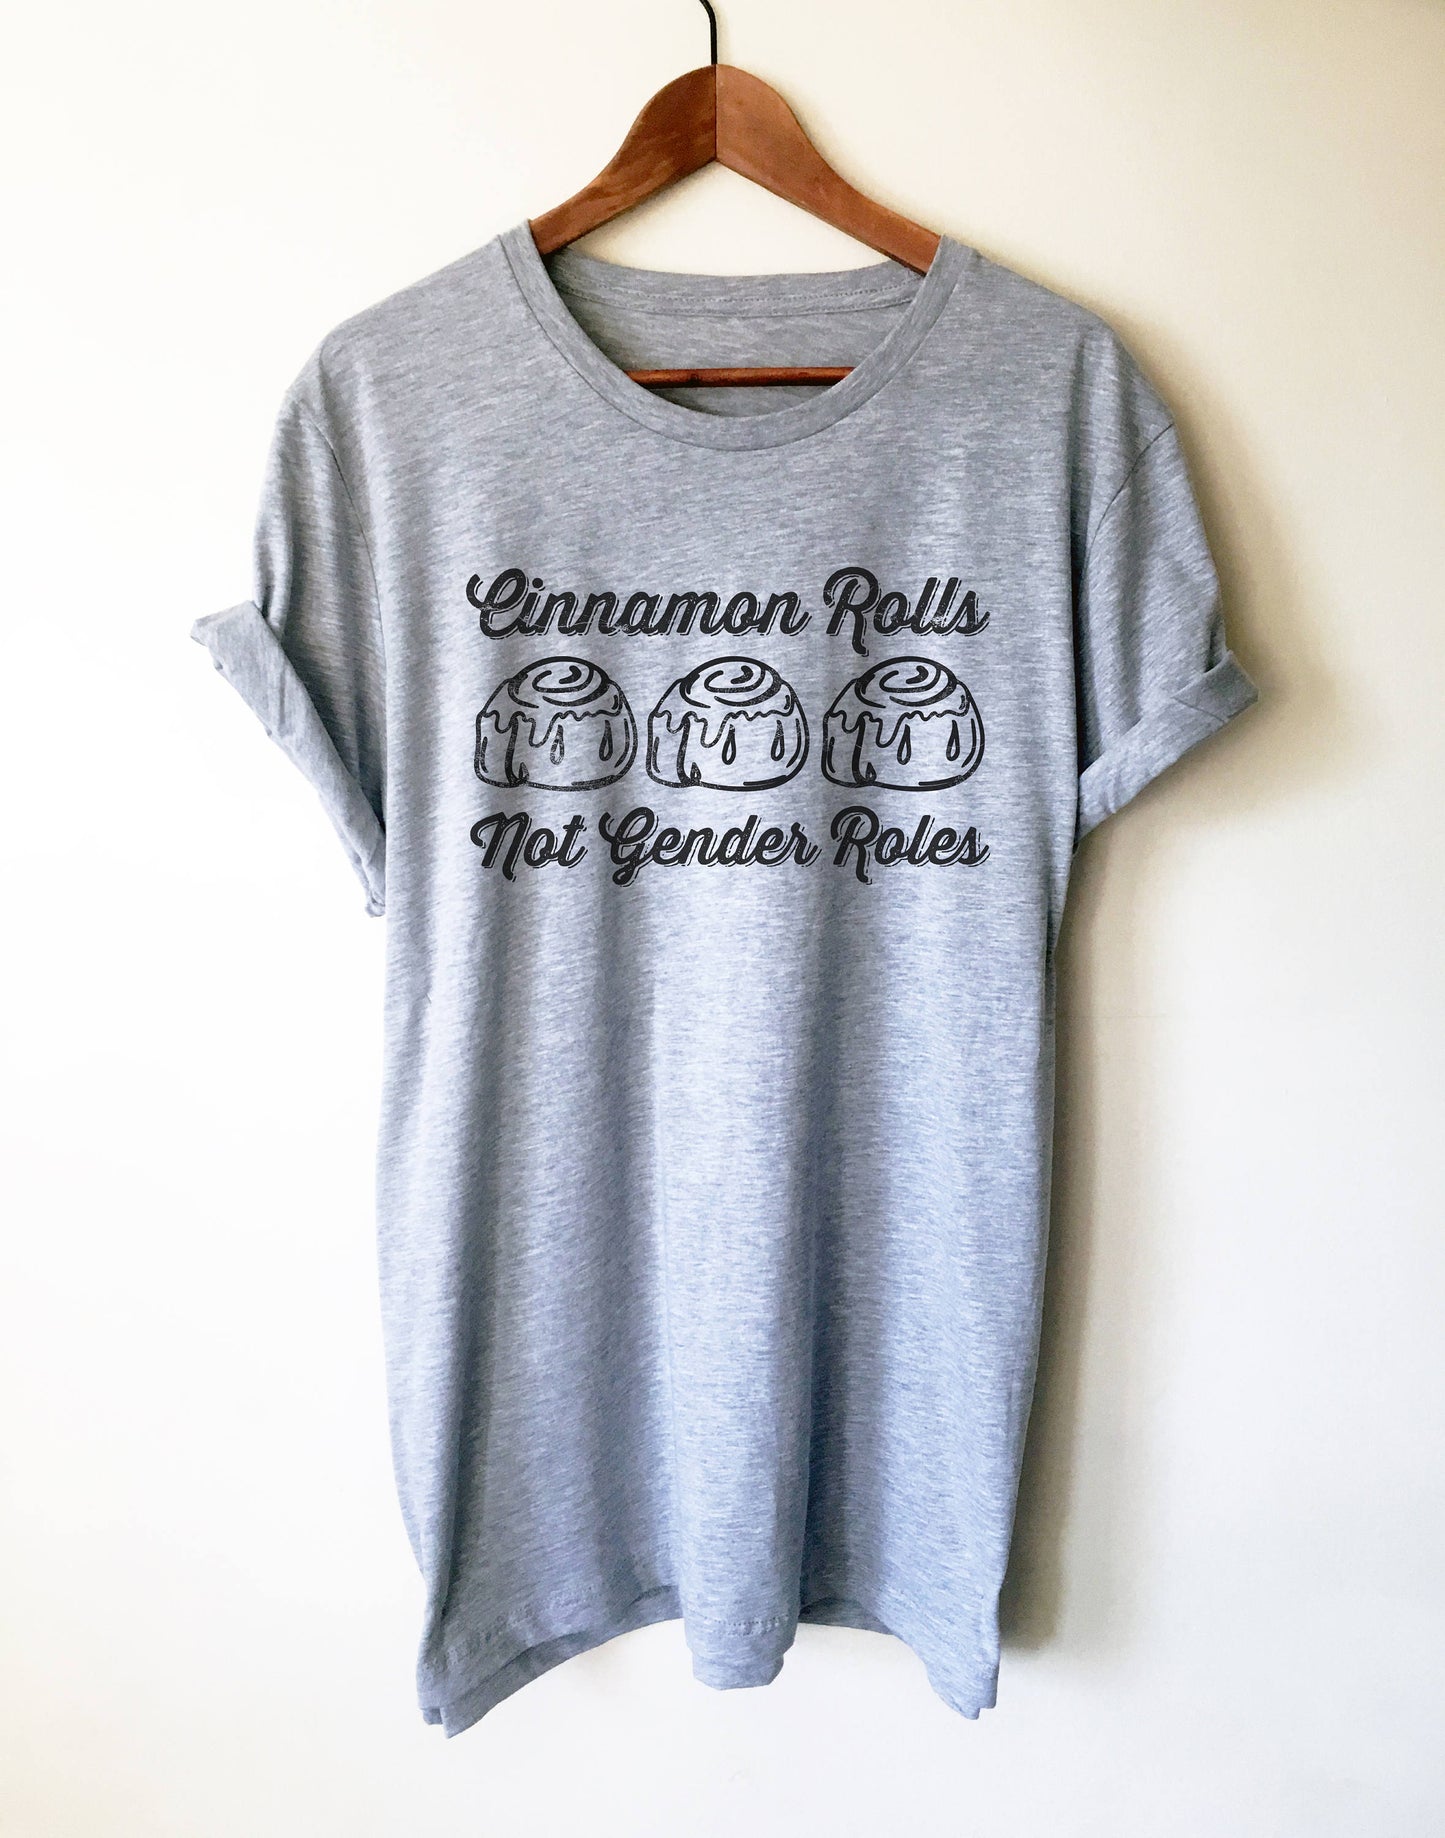 Cinnamon Rolls Not Gender Roles Unisex Shirt-Feminist Shirt, Feminism, Girl Power Shirt, Feminist Gift, The Future Is Female, Feminist Quote